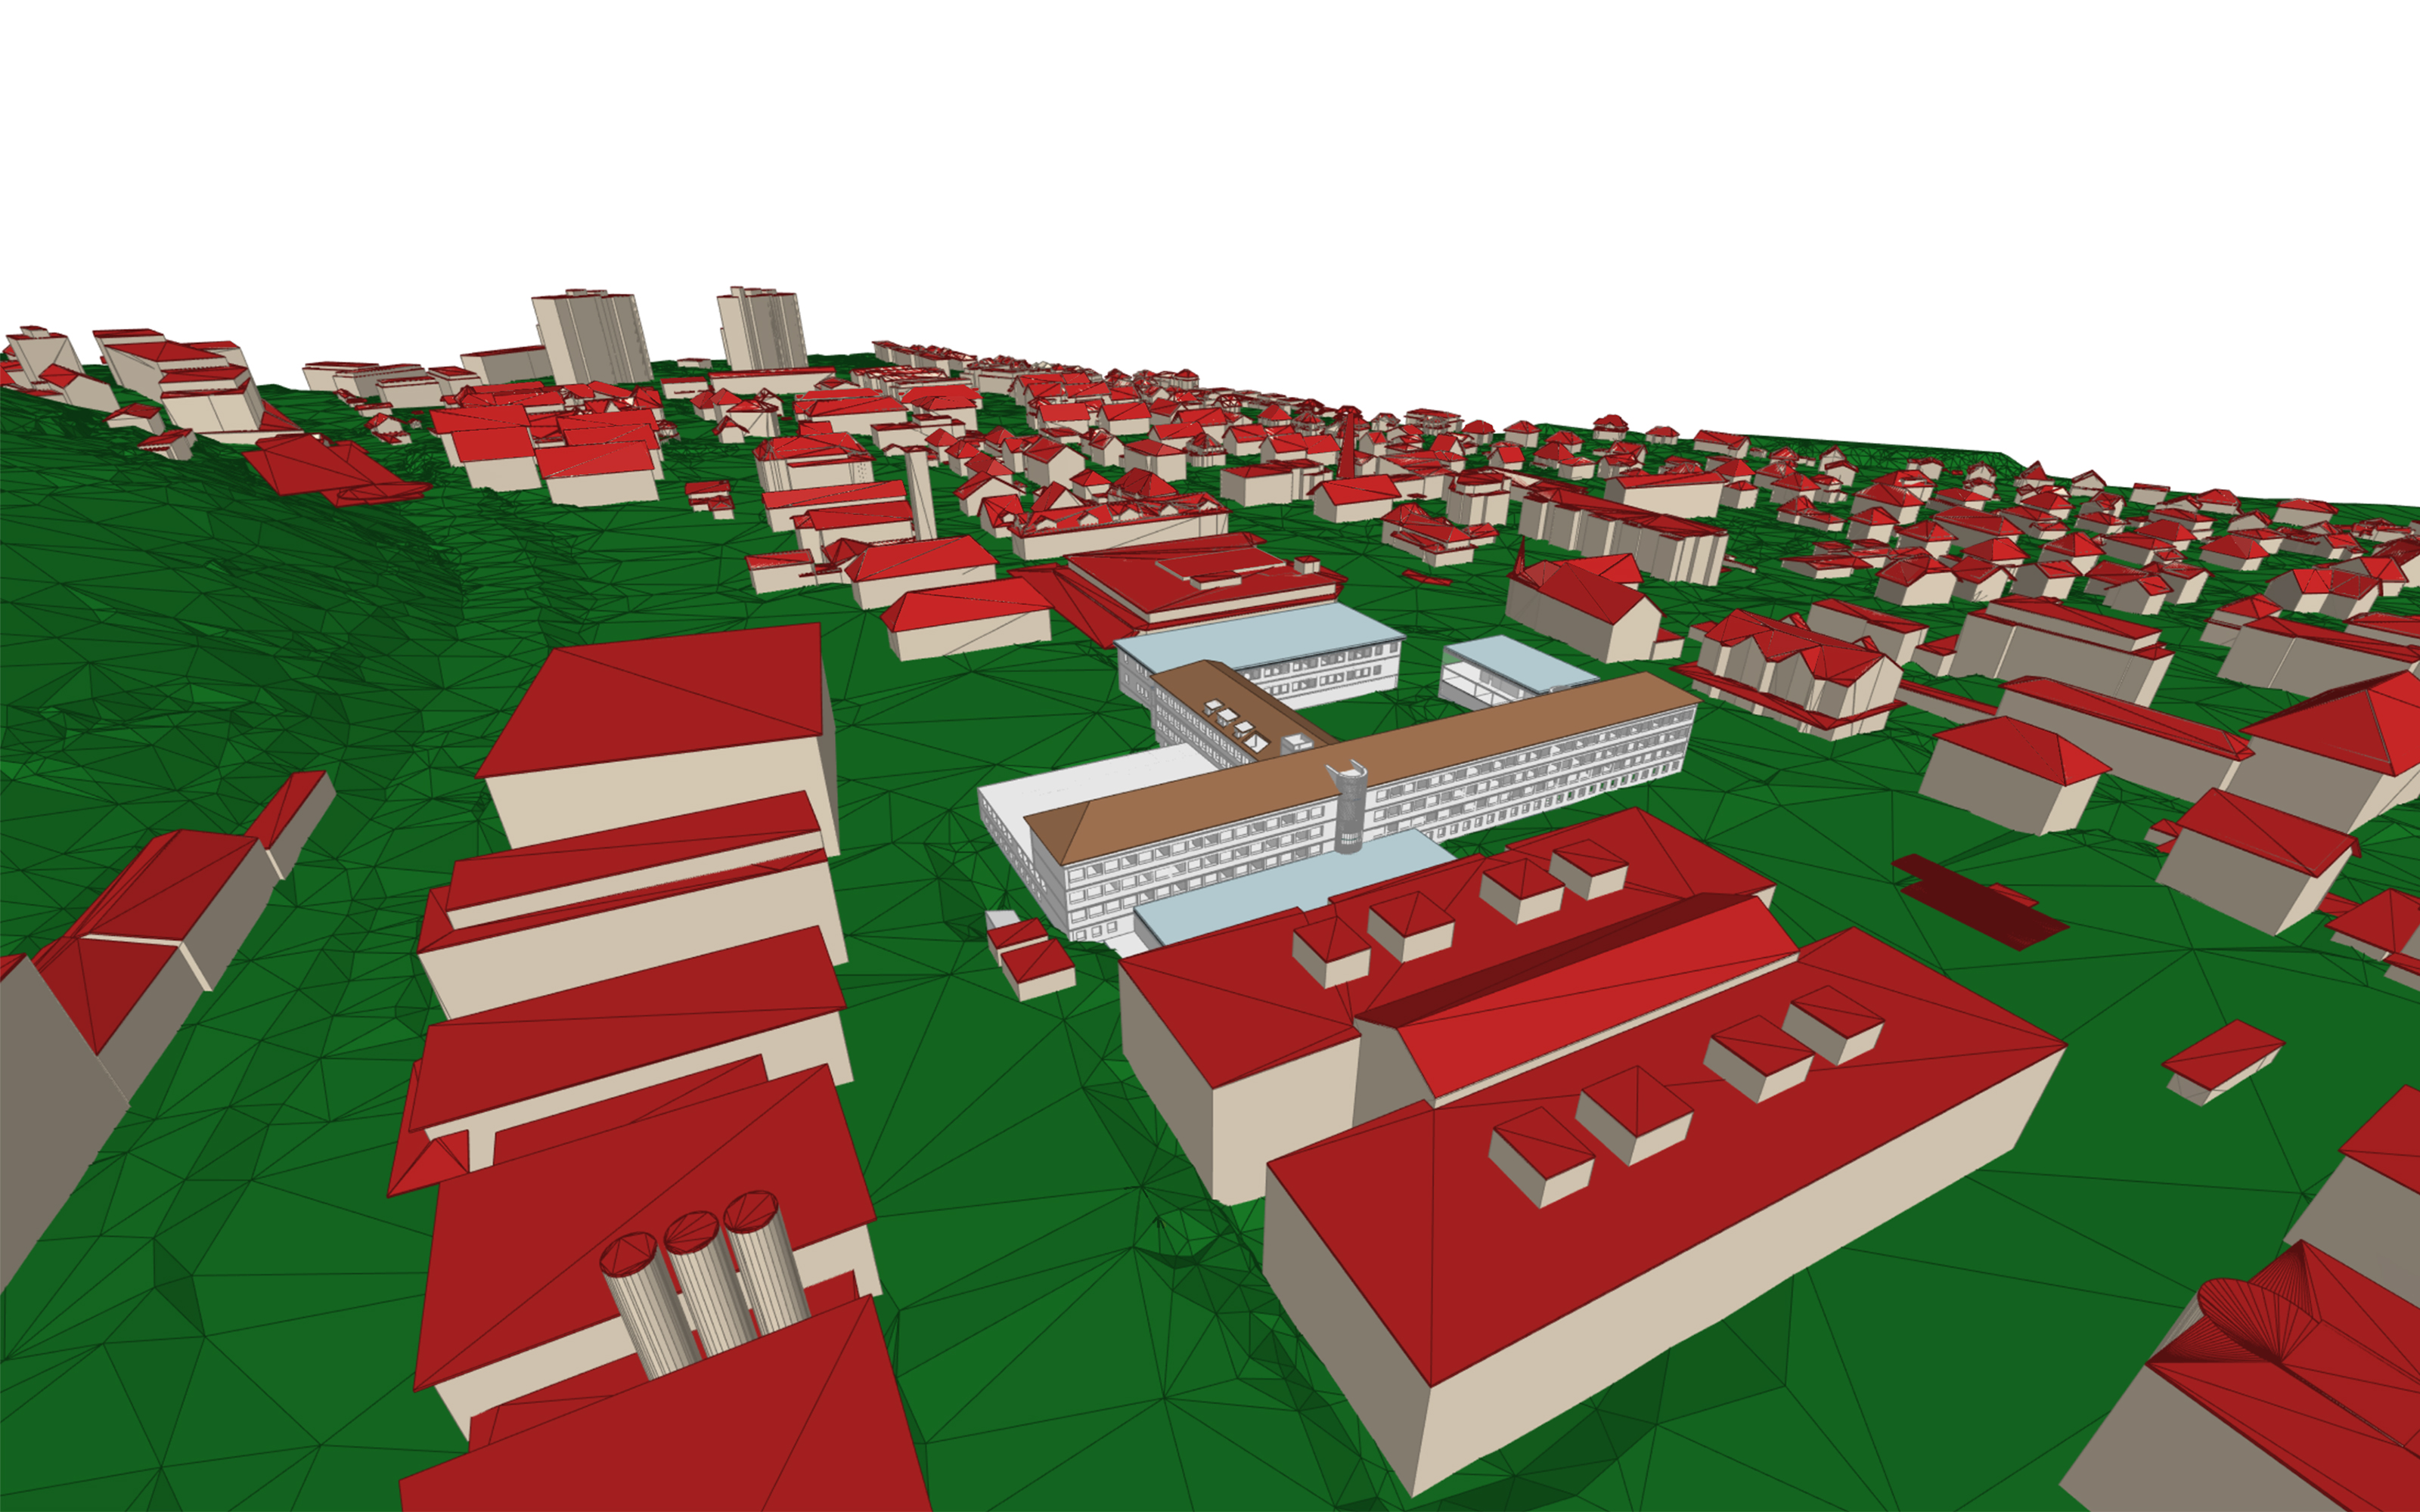 3D representation of an urban area from a bird's eye view